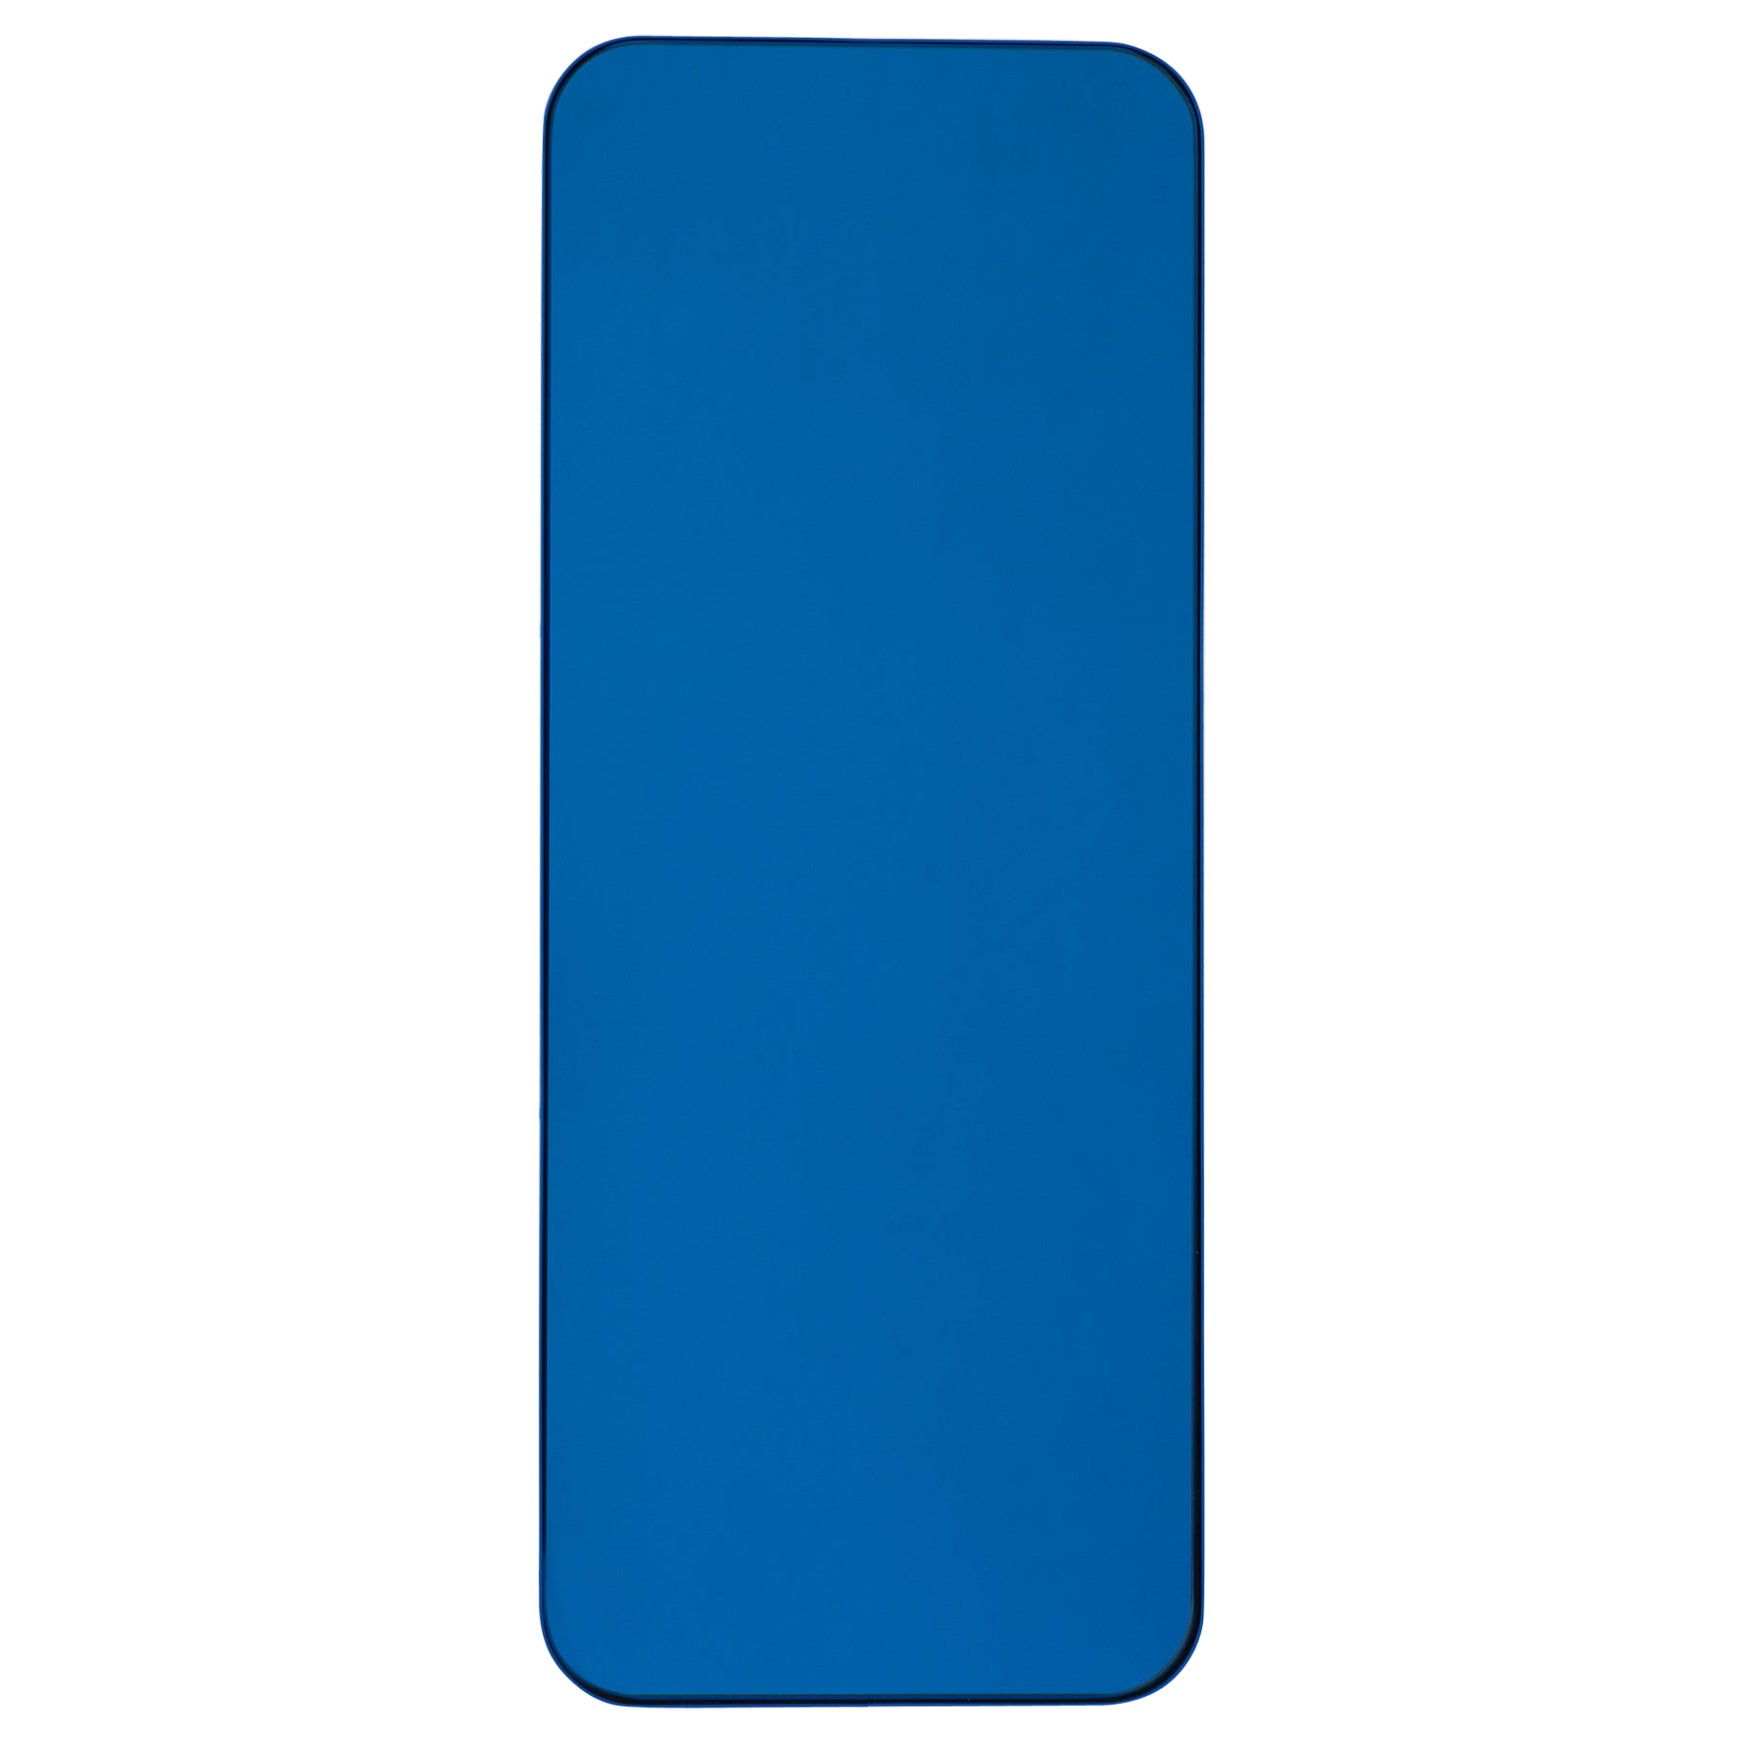 Quadris Rectangular Blue Tinted Mirror with a Blue Frame, Medium For Sale